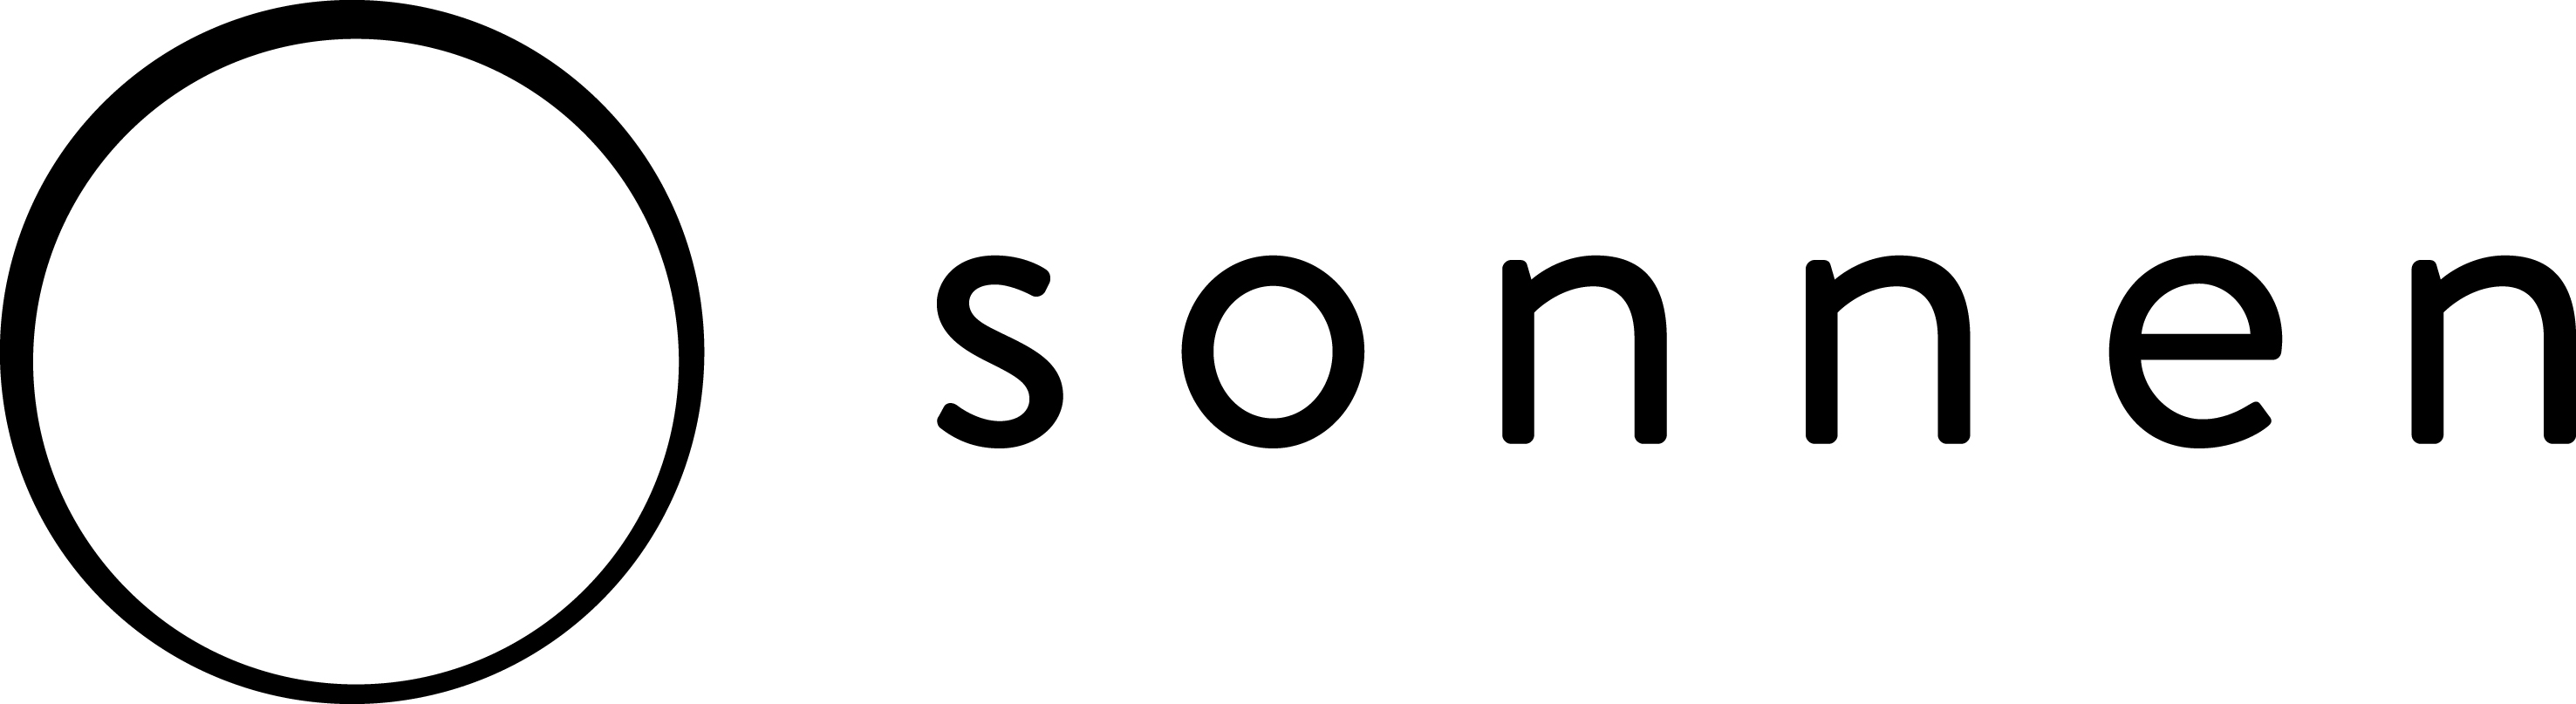 sonnen logo wordmark hor 1